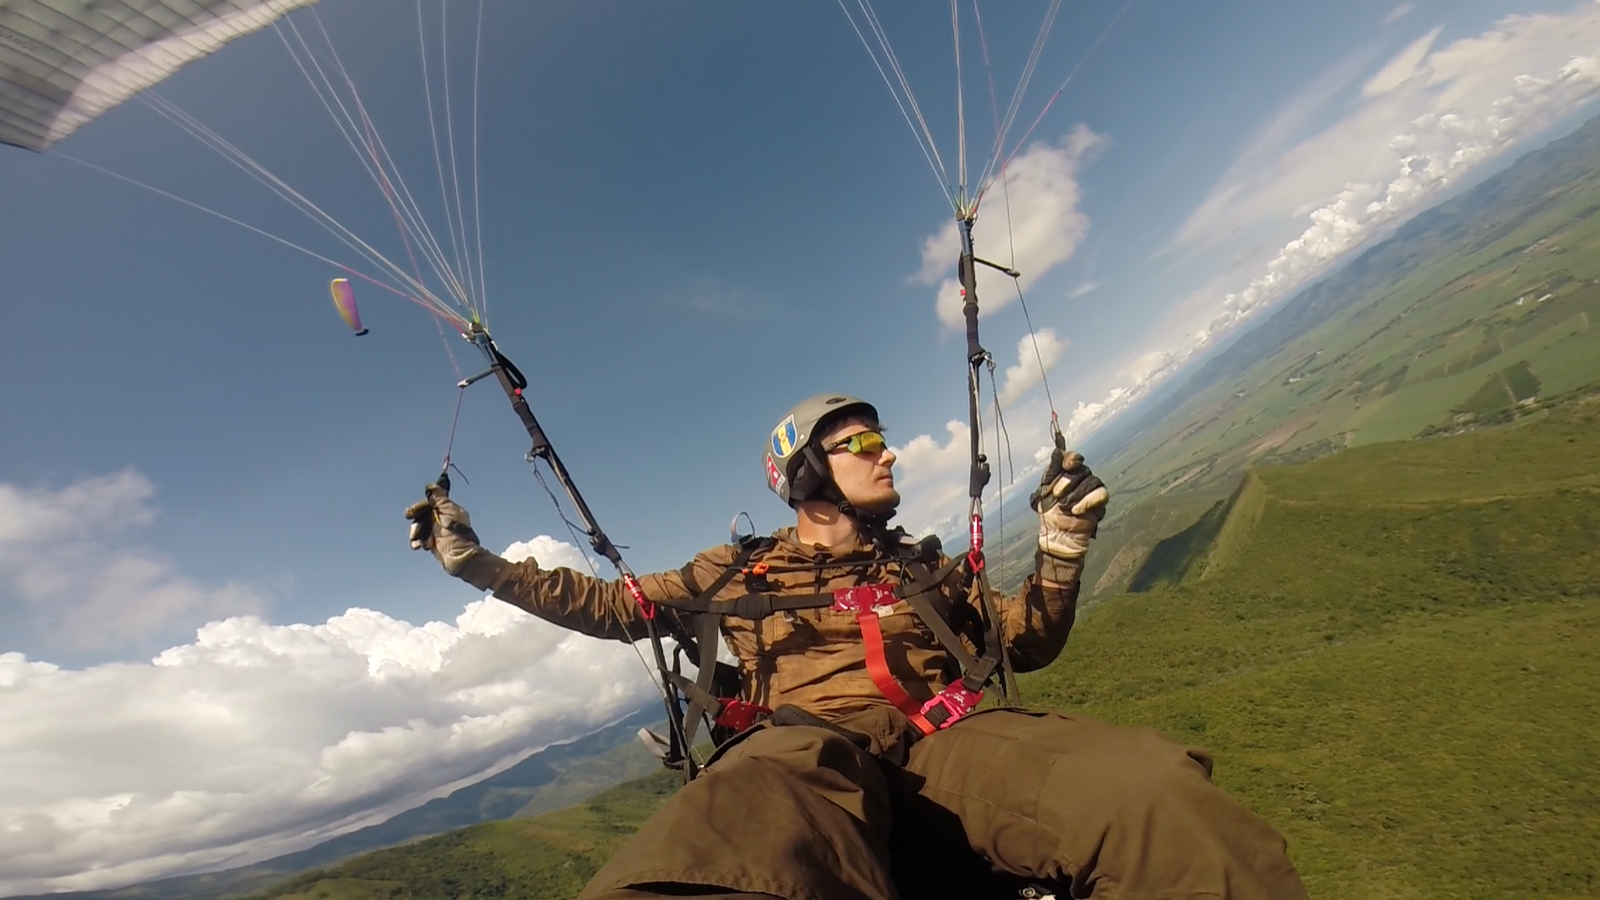 Turning paraglider 2